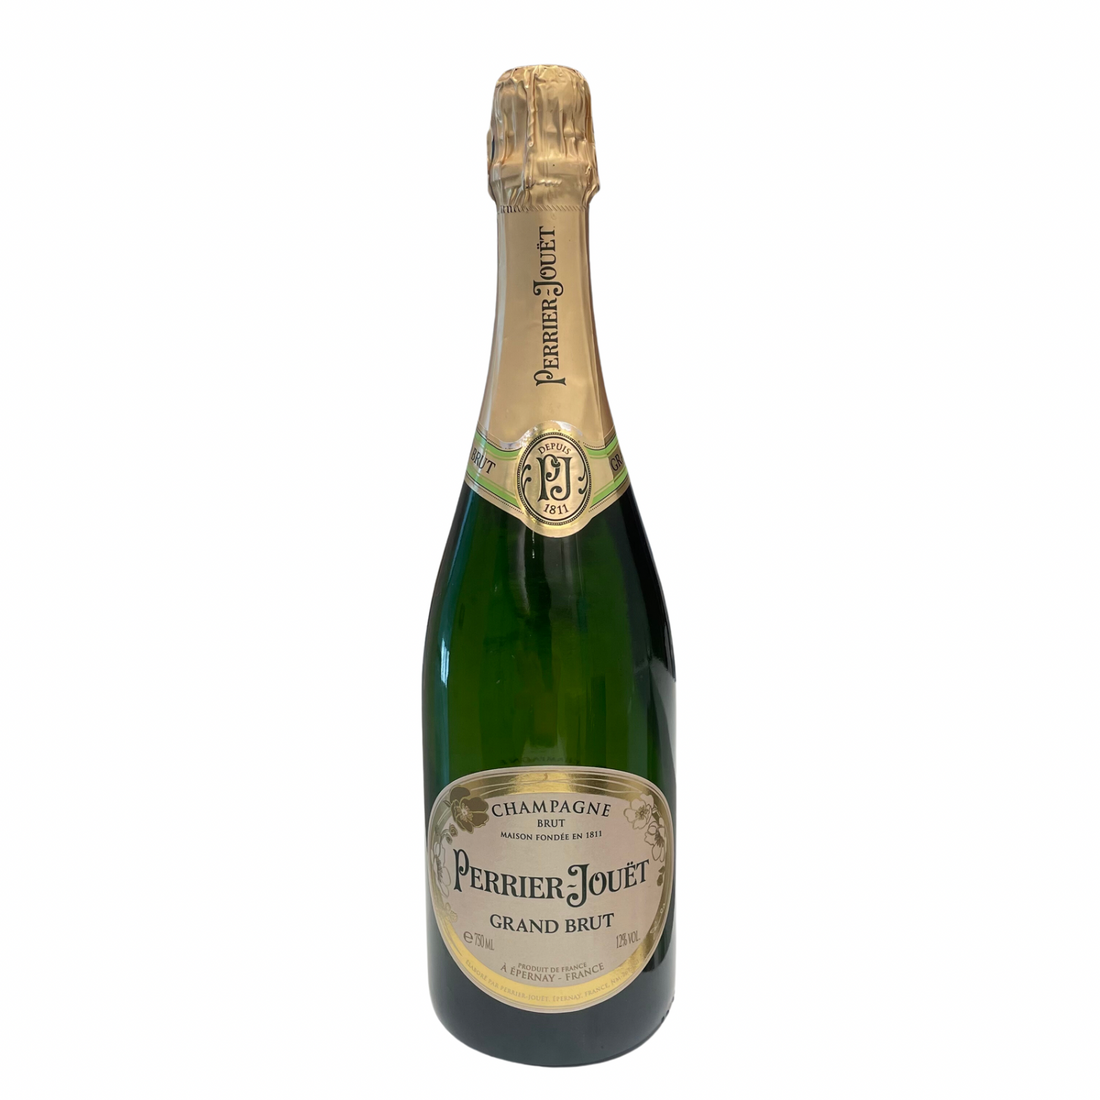 Grand Brut Champagne sbocc. anni 10’